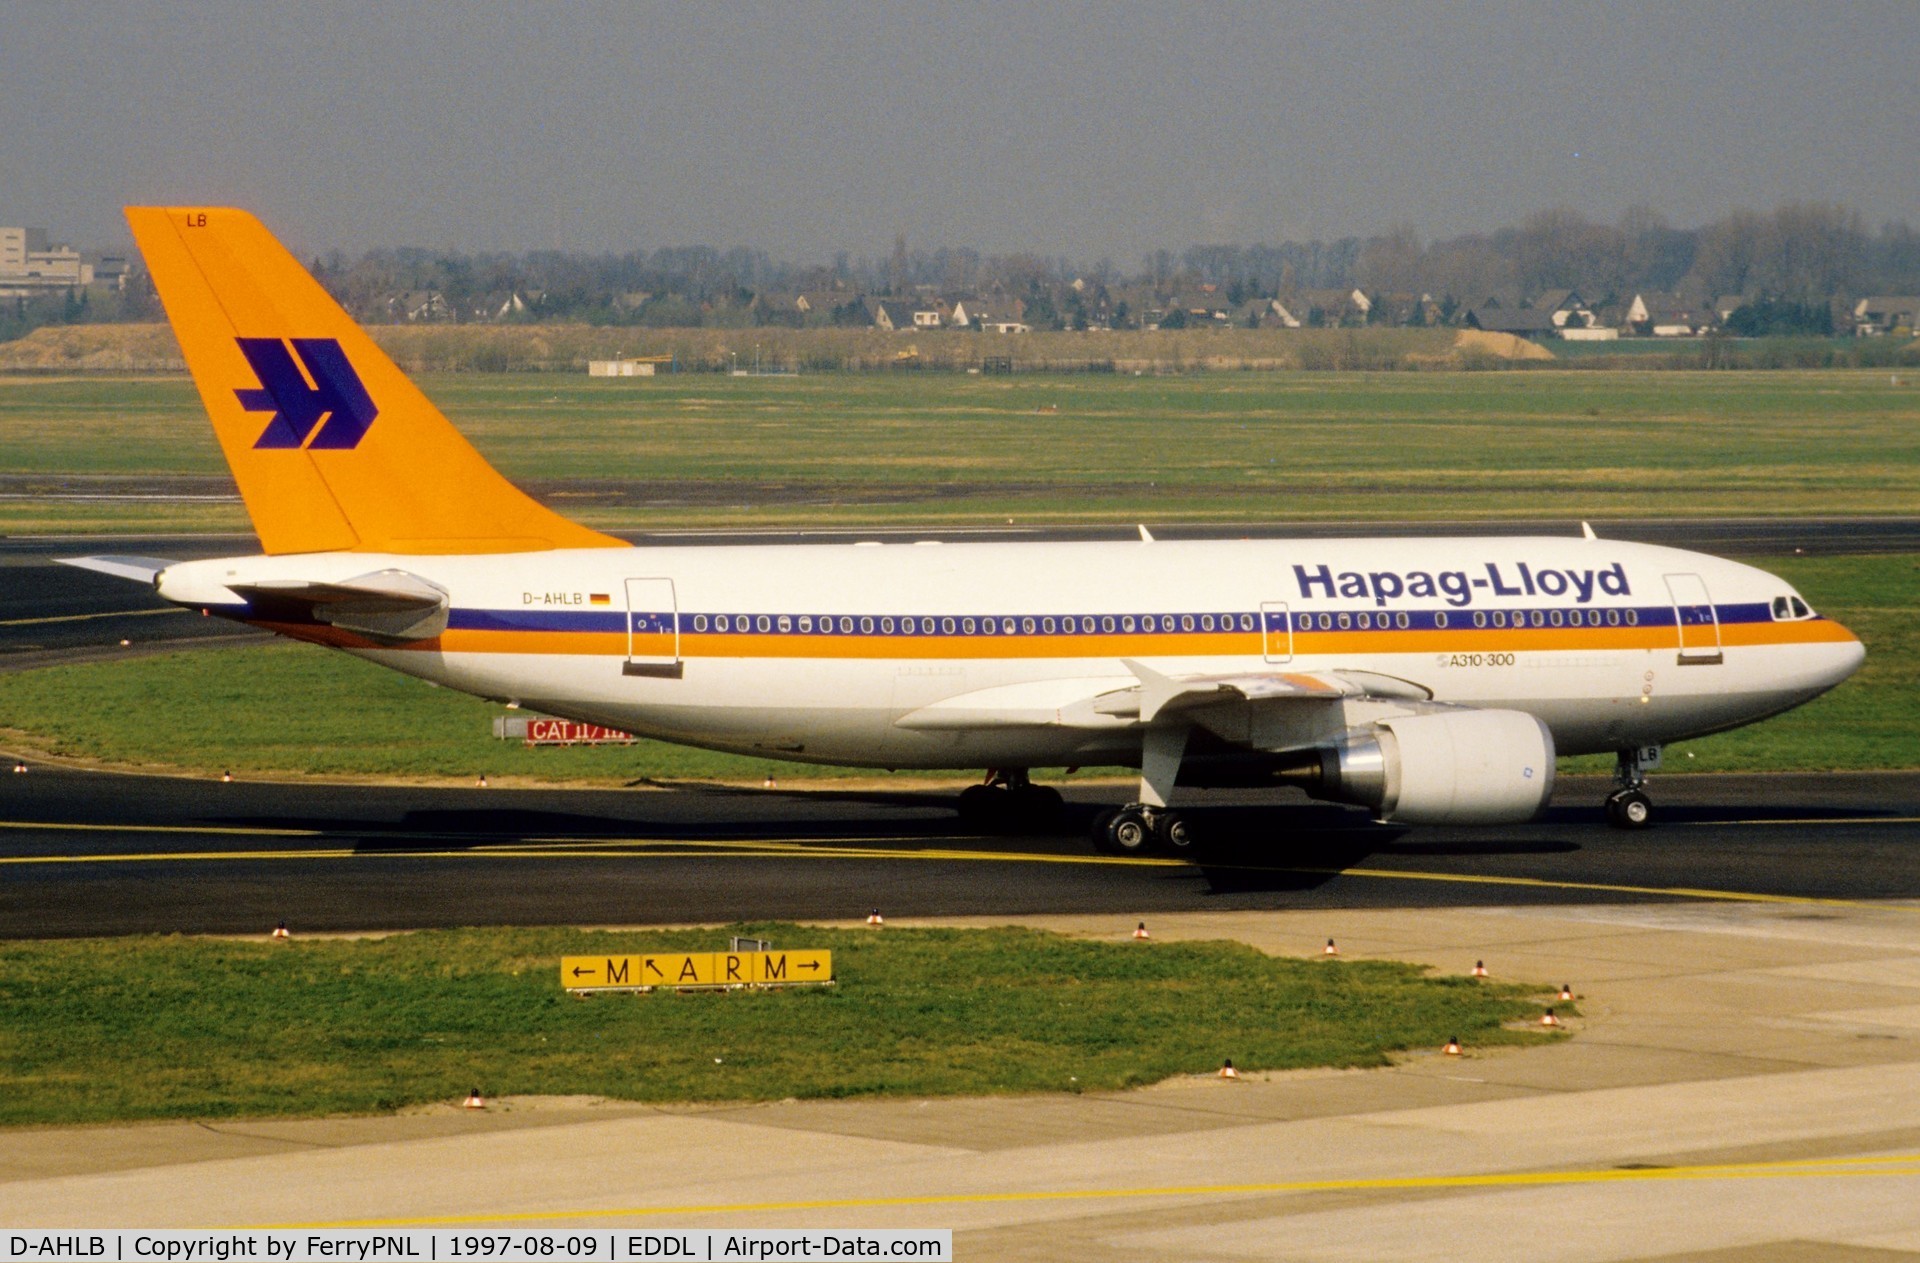 D-AHLB, 1989 Airbus A310-304 C/N 528, Hapag-LLoyd A310